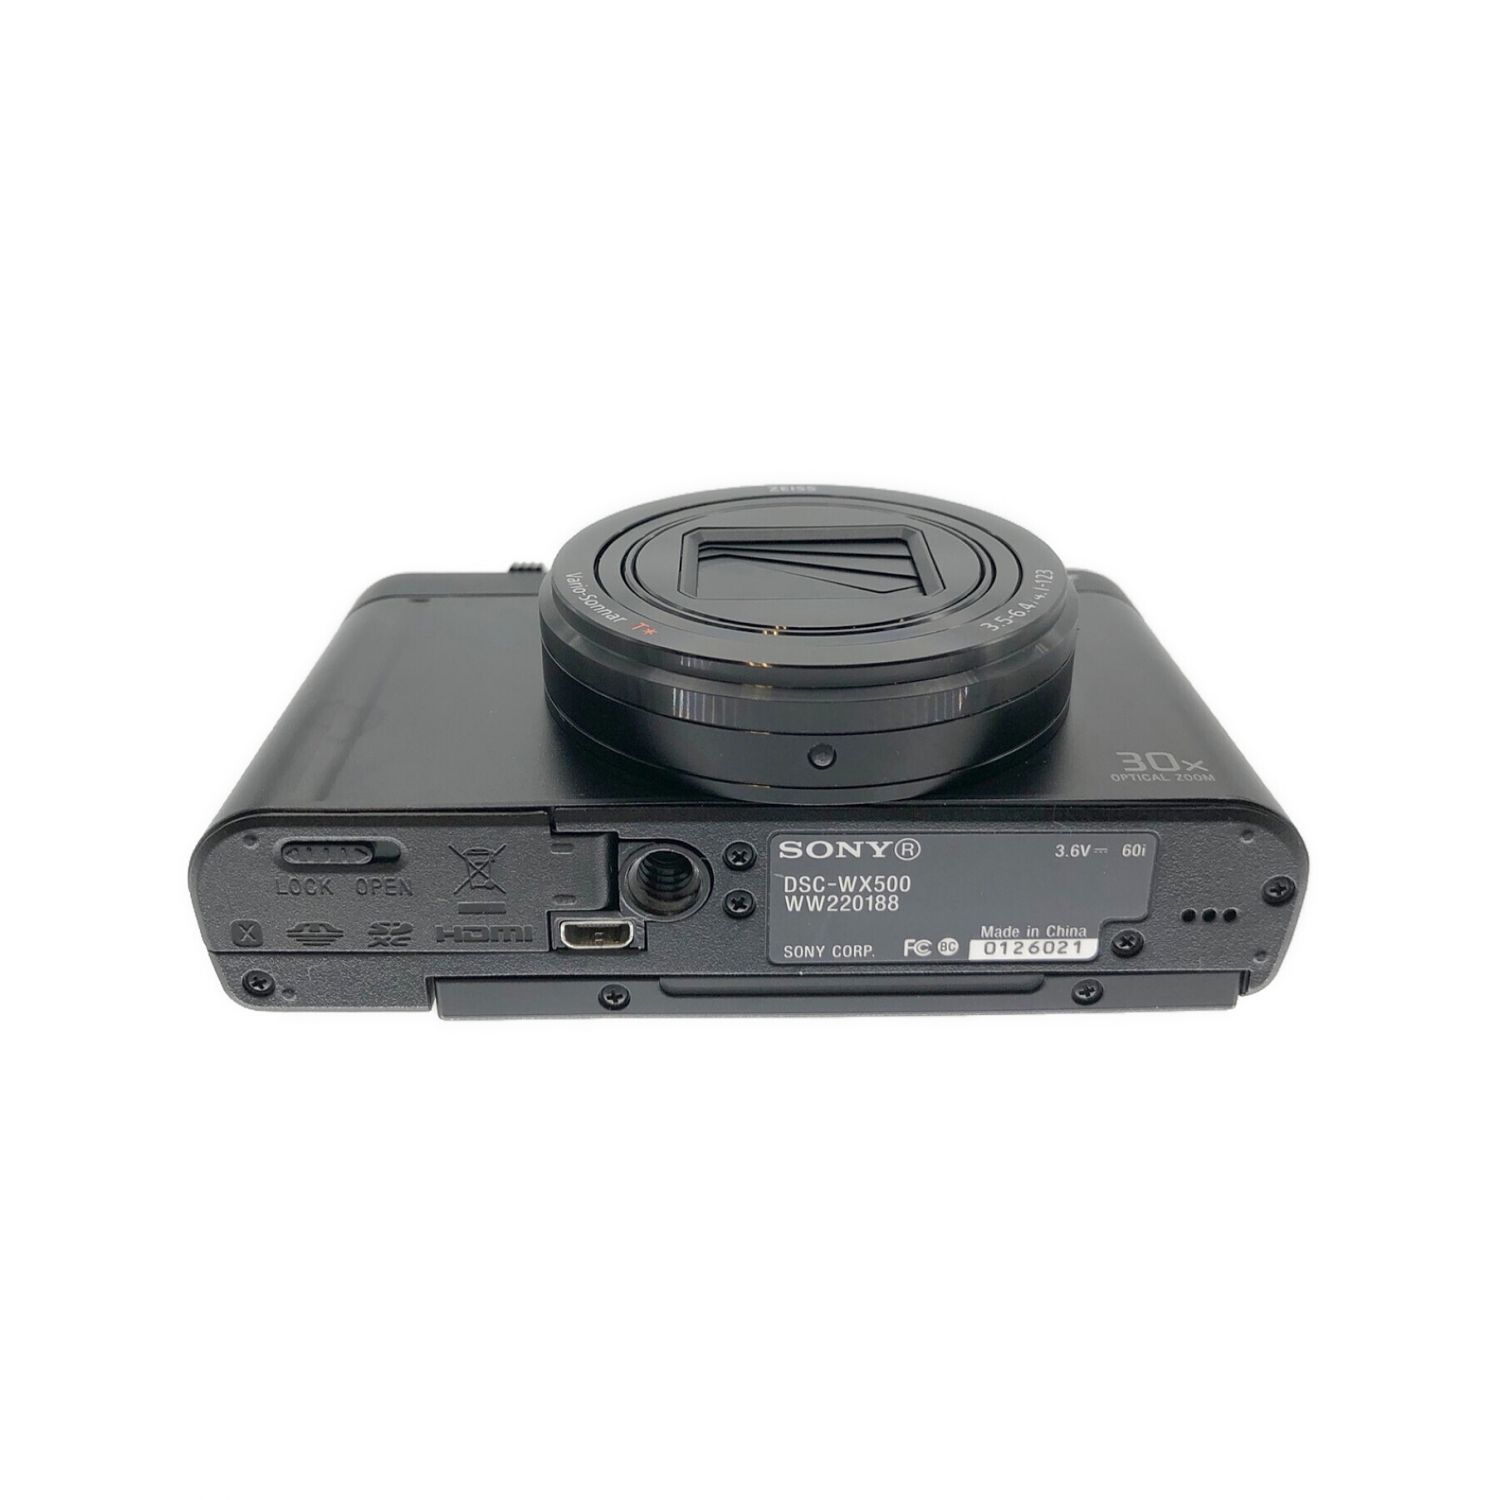 SONY (ソニー) サイバーショット デジタルスチルカメラ DSC-WX500